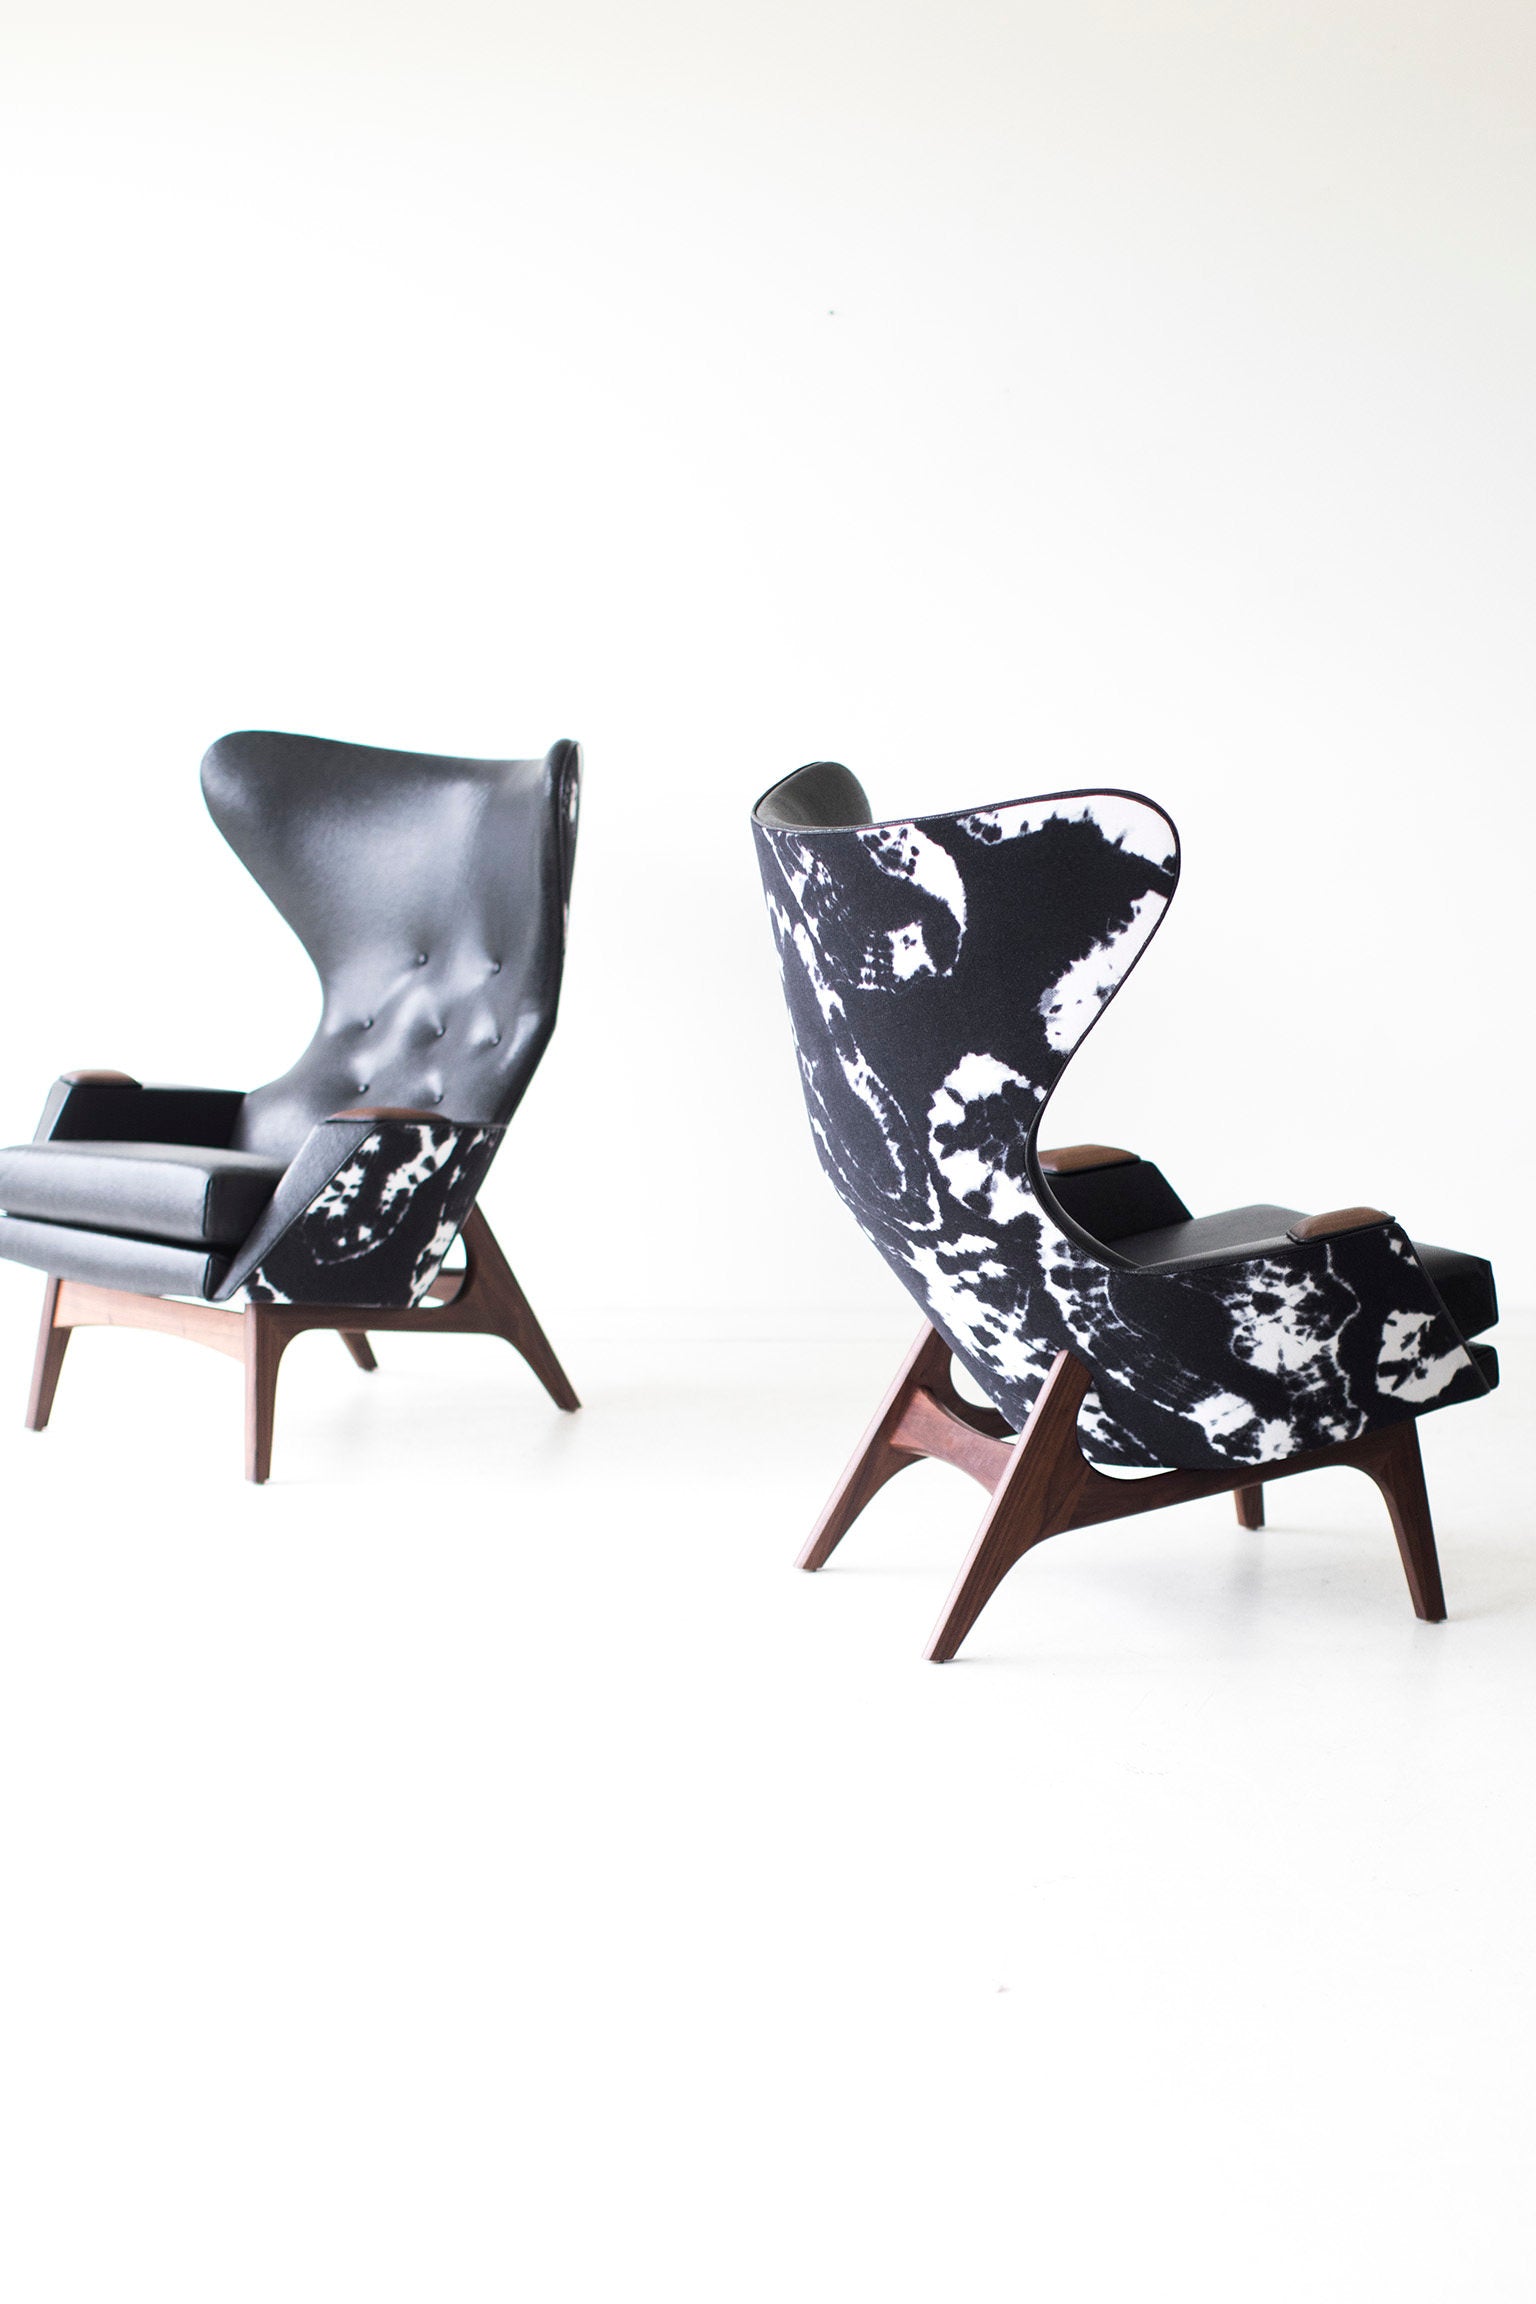 craft-associates-modern-wing-chairs-1407-05